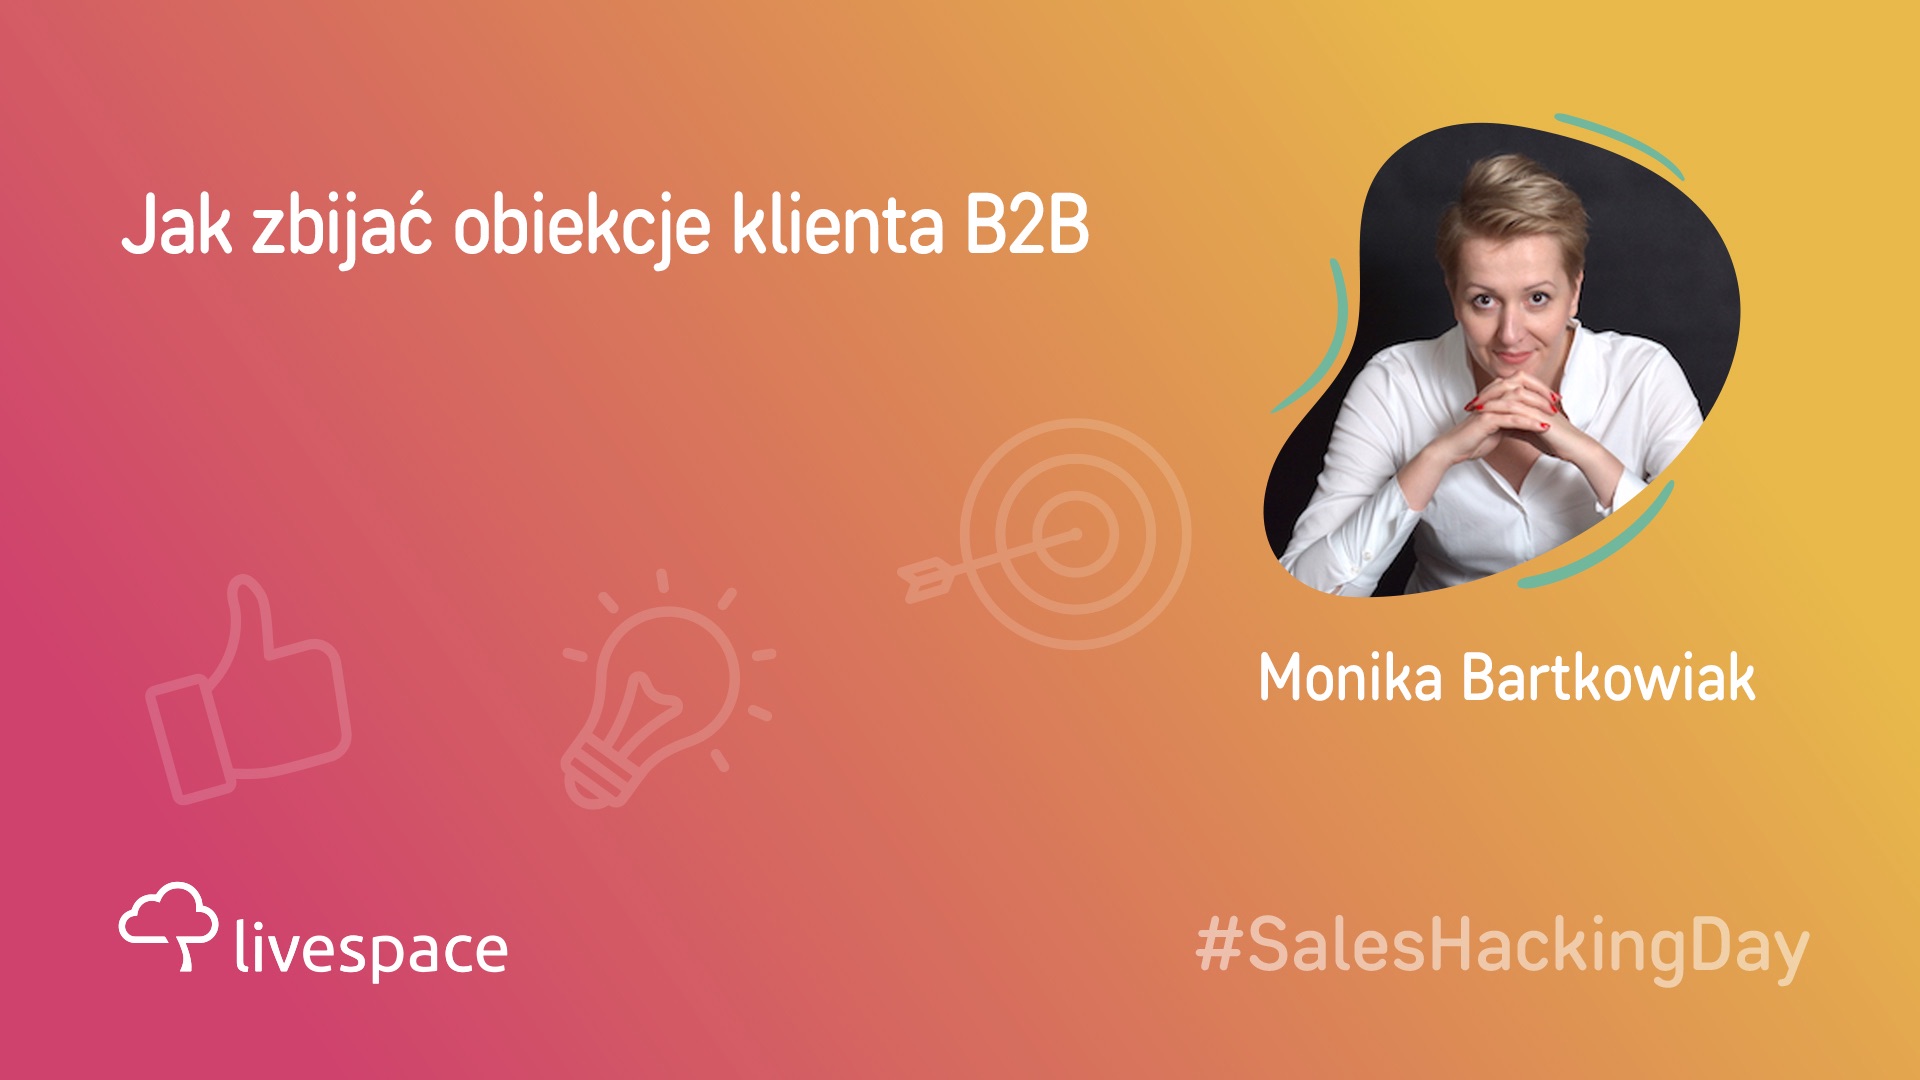 Sales Hacking Day 2019 - Monika Bartkowiak